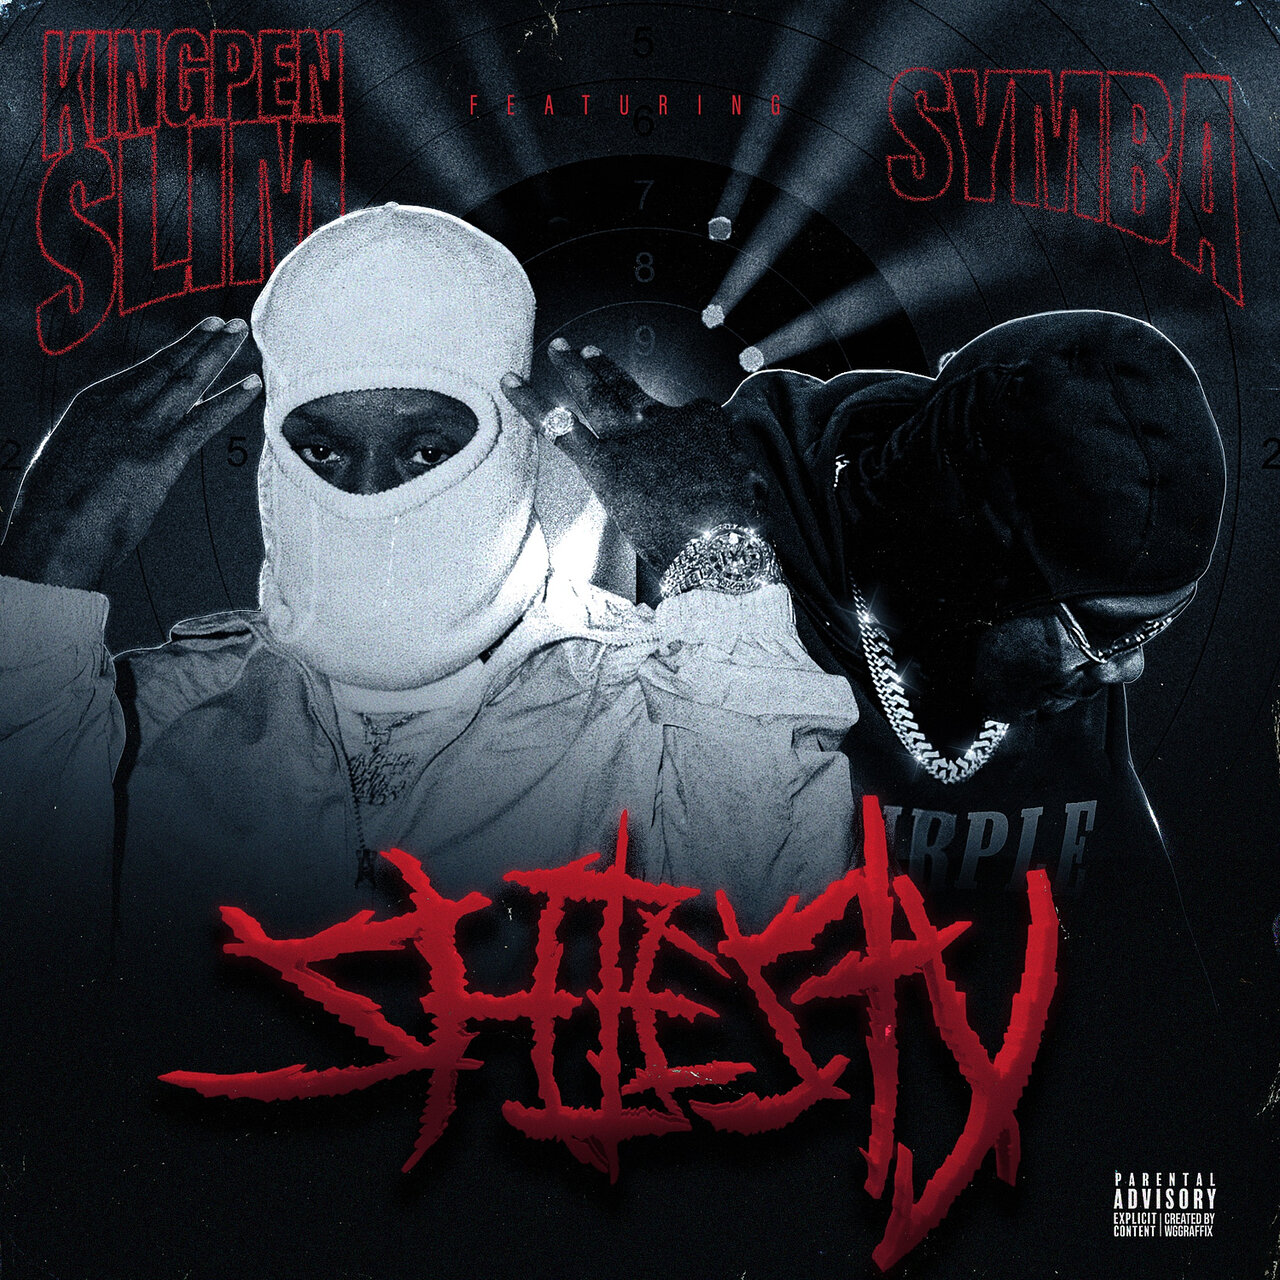 Kingpen Slim Feat. Symba – “Shiesty”